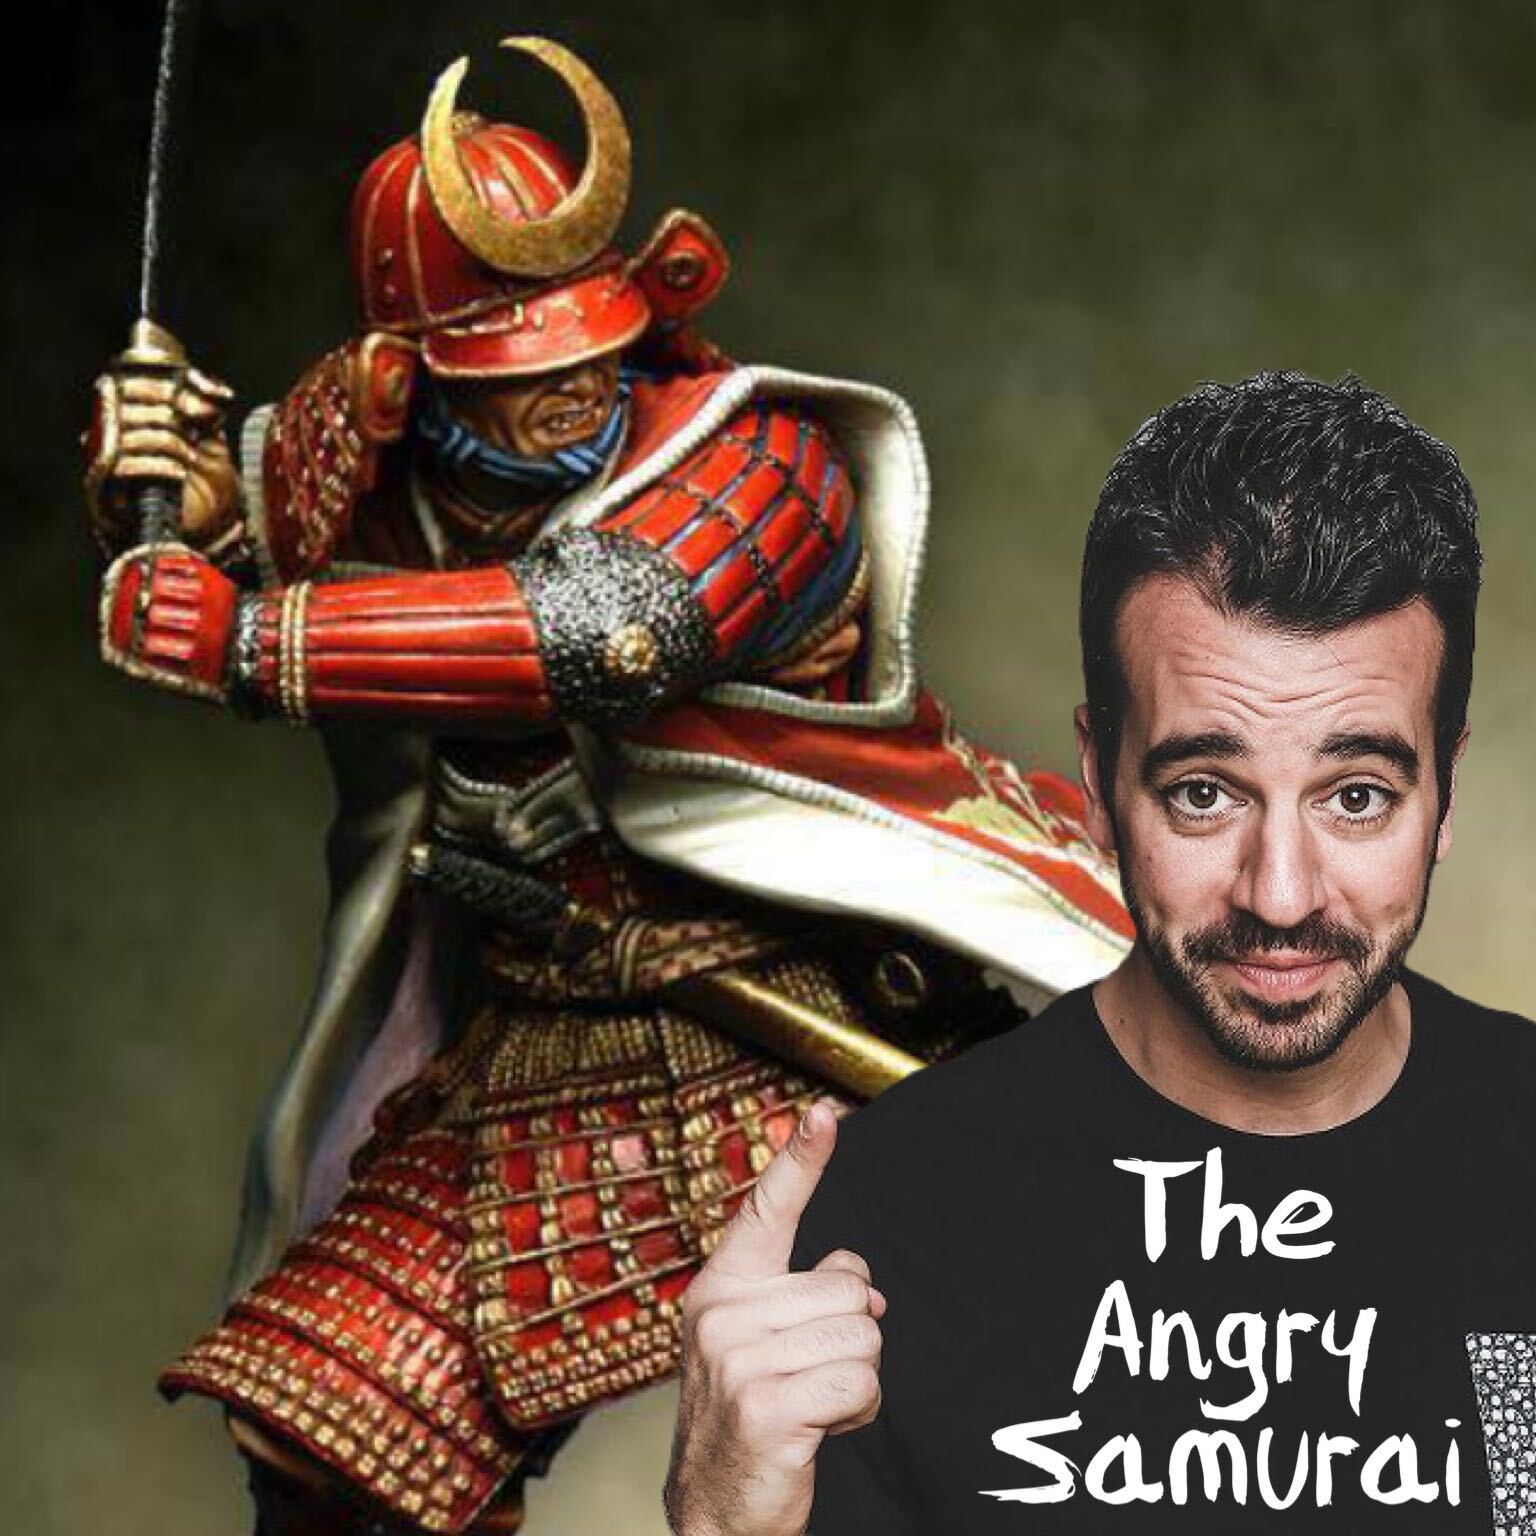 024: The Angry Samurai